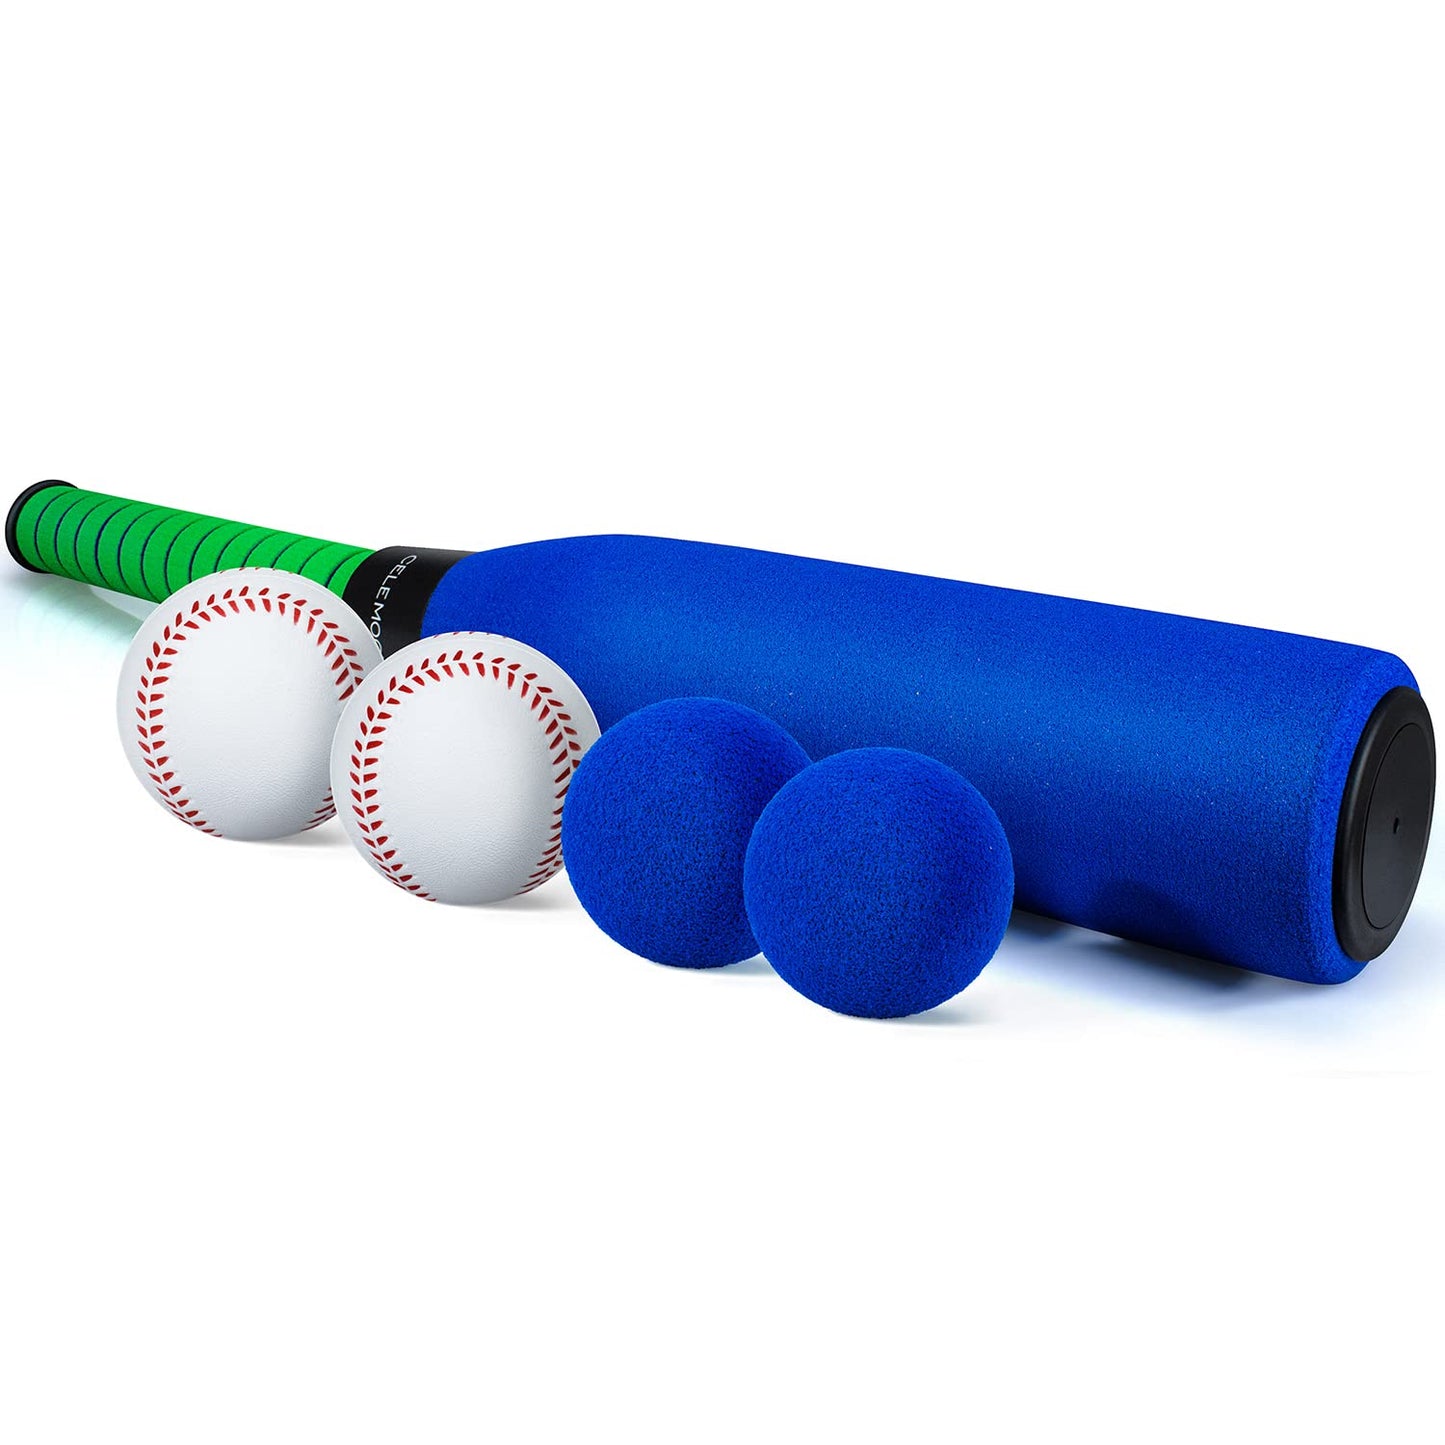 (Blue) - CELEMOON Kids Soft Foam Mini T-Ball/Standard Sized Baseball Set Toy + Different Coloured Balls + Carry/Organise Bag Kids Over 1 Years Old